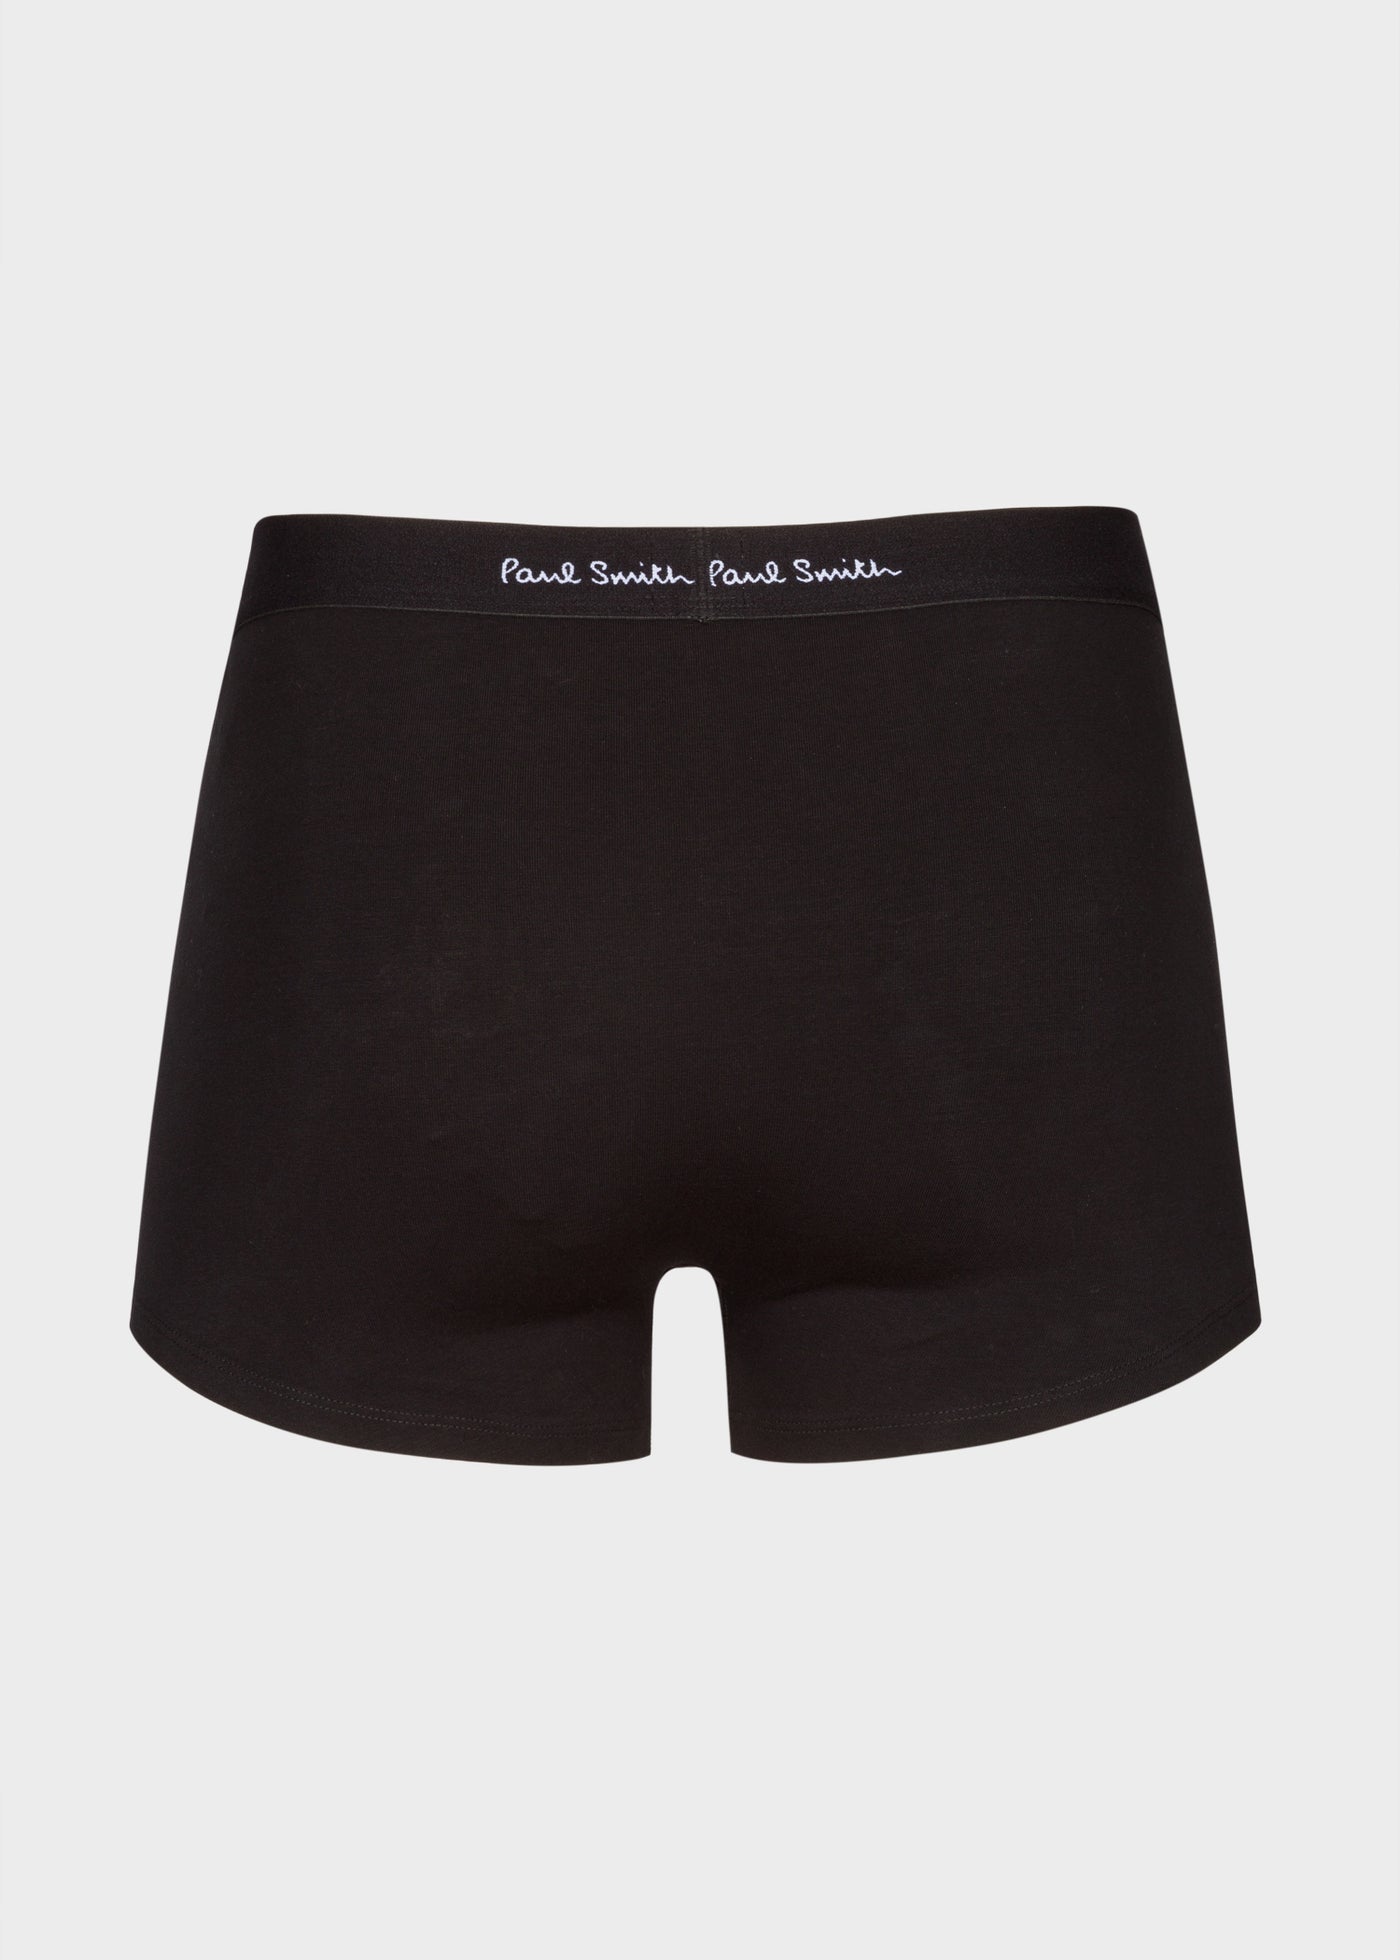 Paul Smith Mixed Stripe Boxer Briefs Three Pack | Multi / Black / White